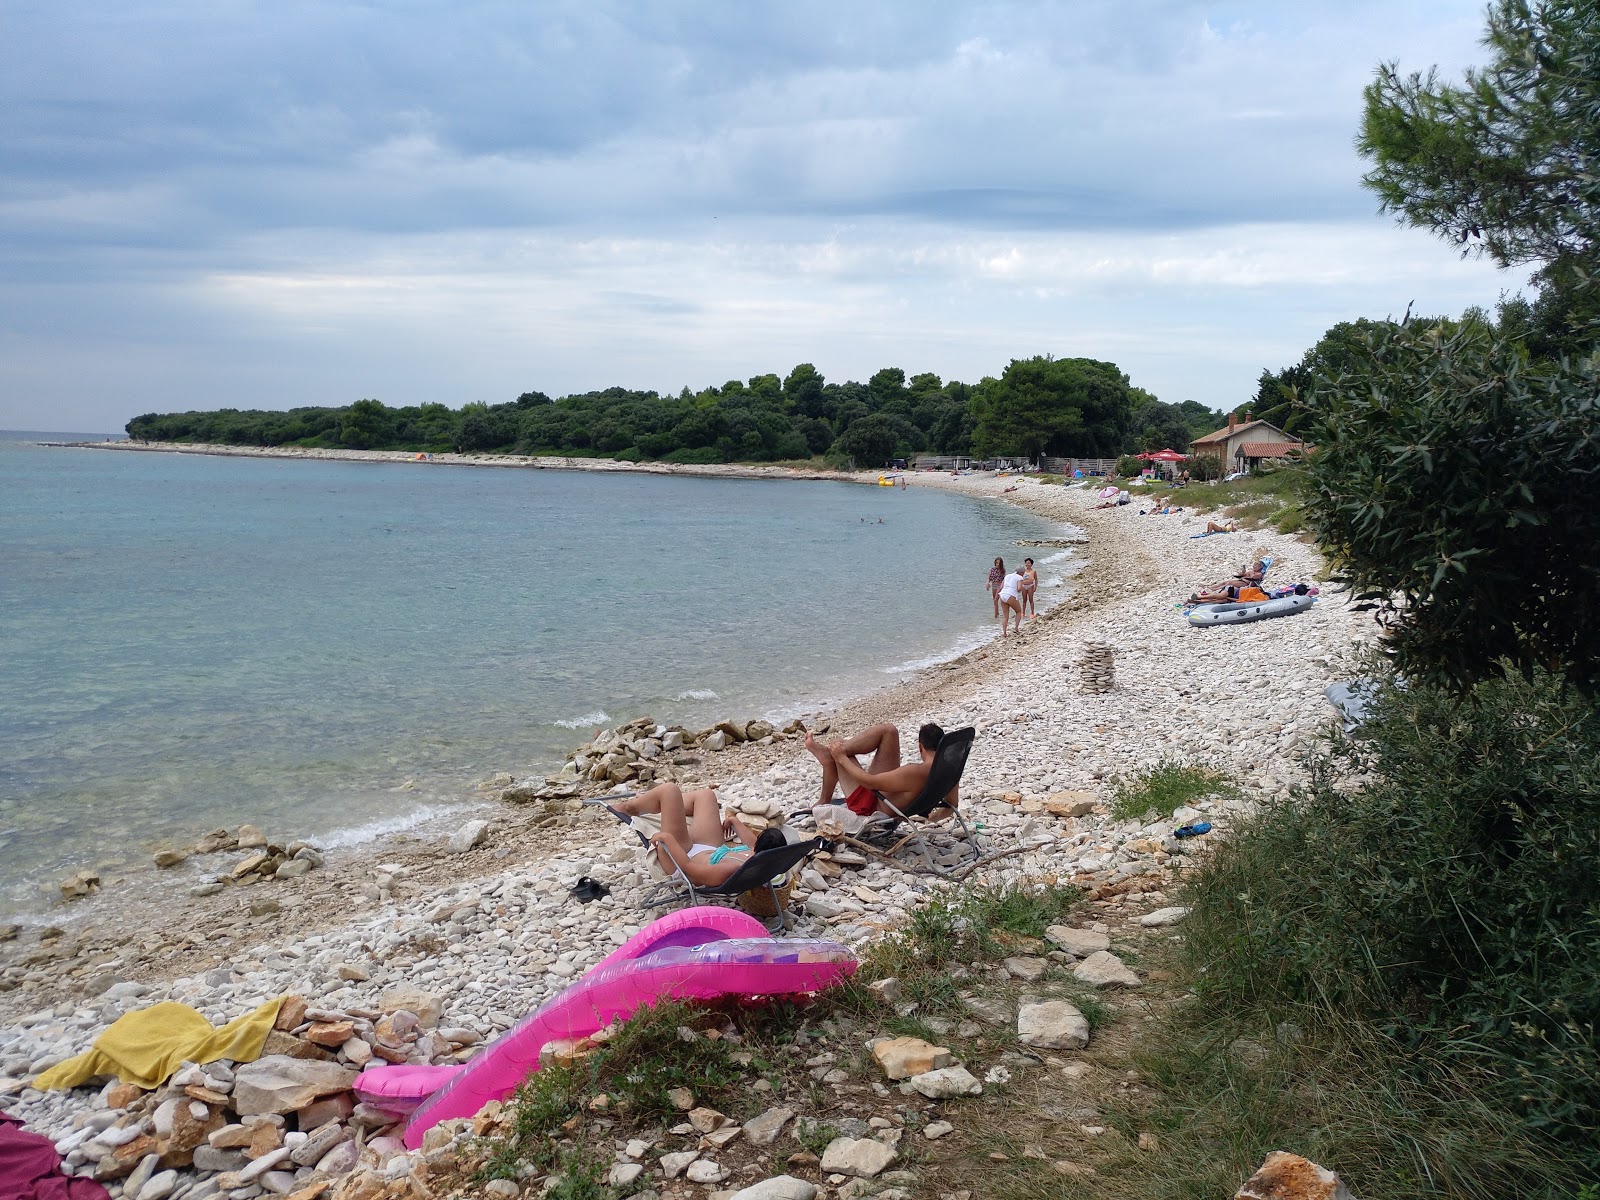 Fotografie cu Meneghetti beach - locul popular printre cunoscătorii de relaxare